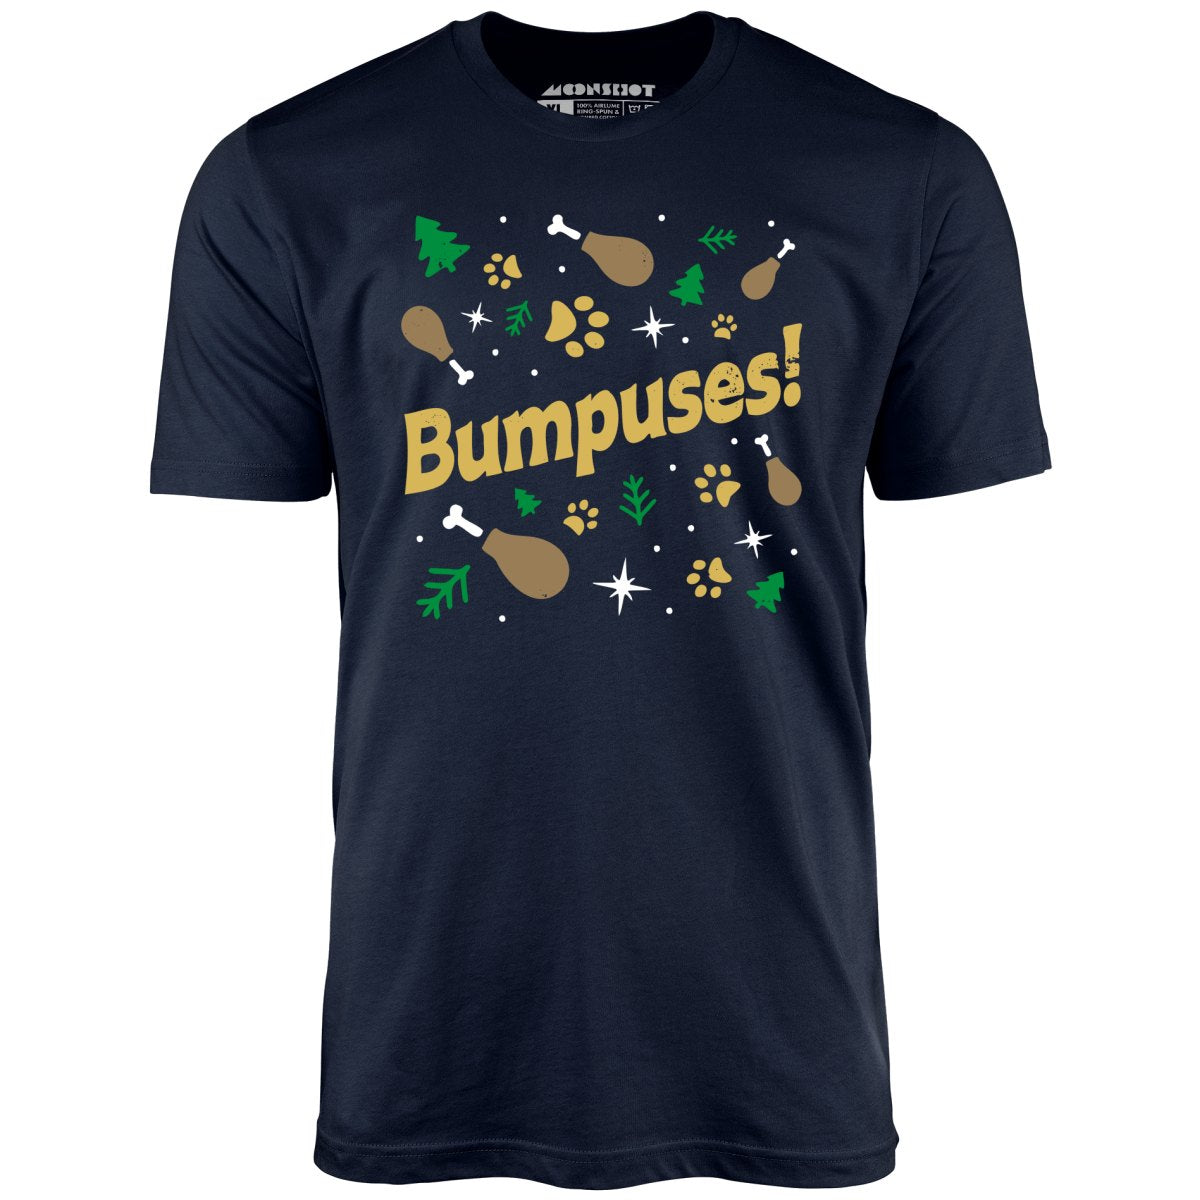 Bumpuses! - Unisex T-Shirt